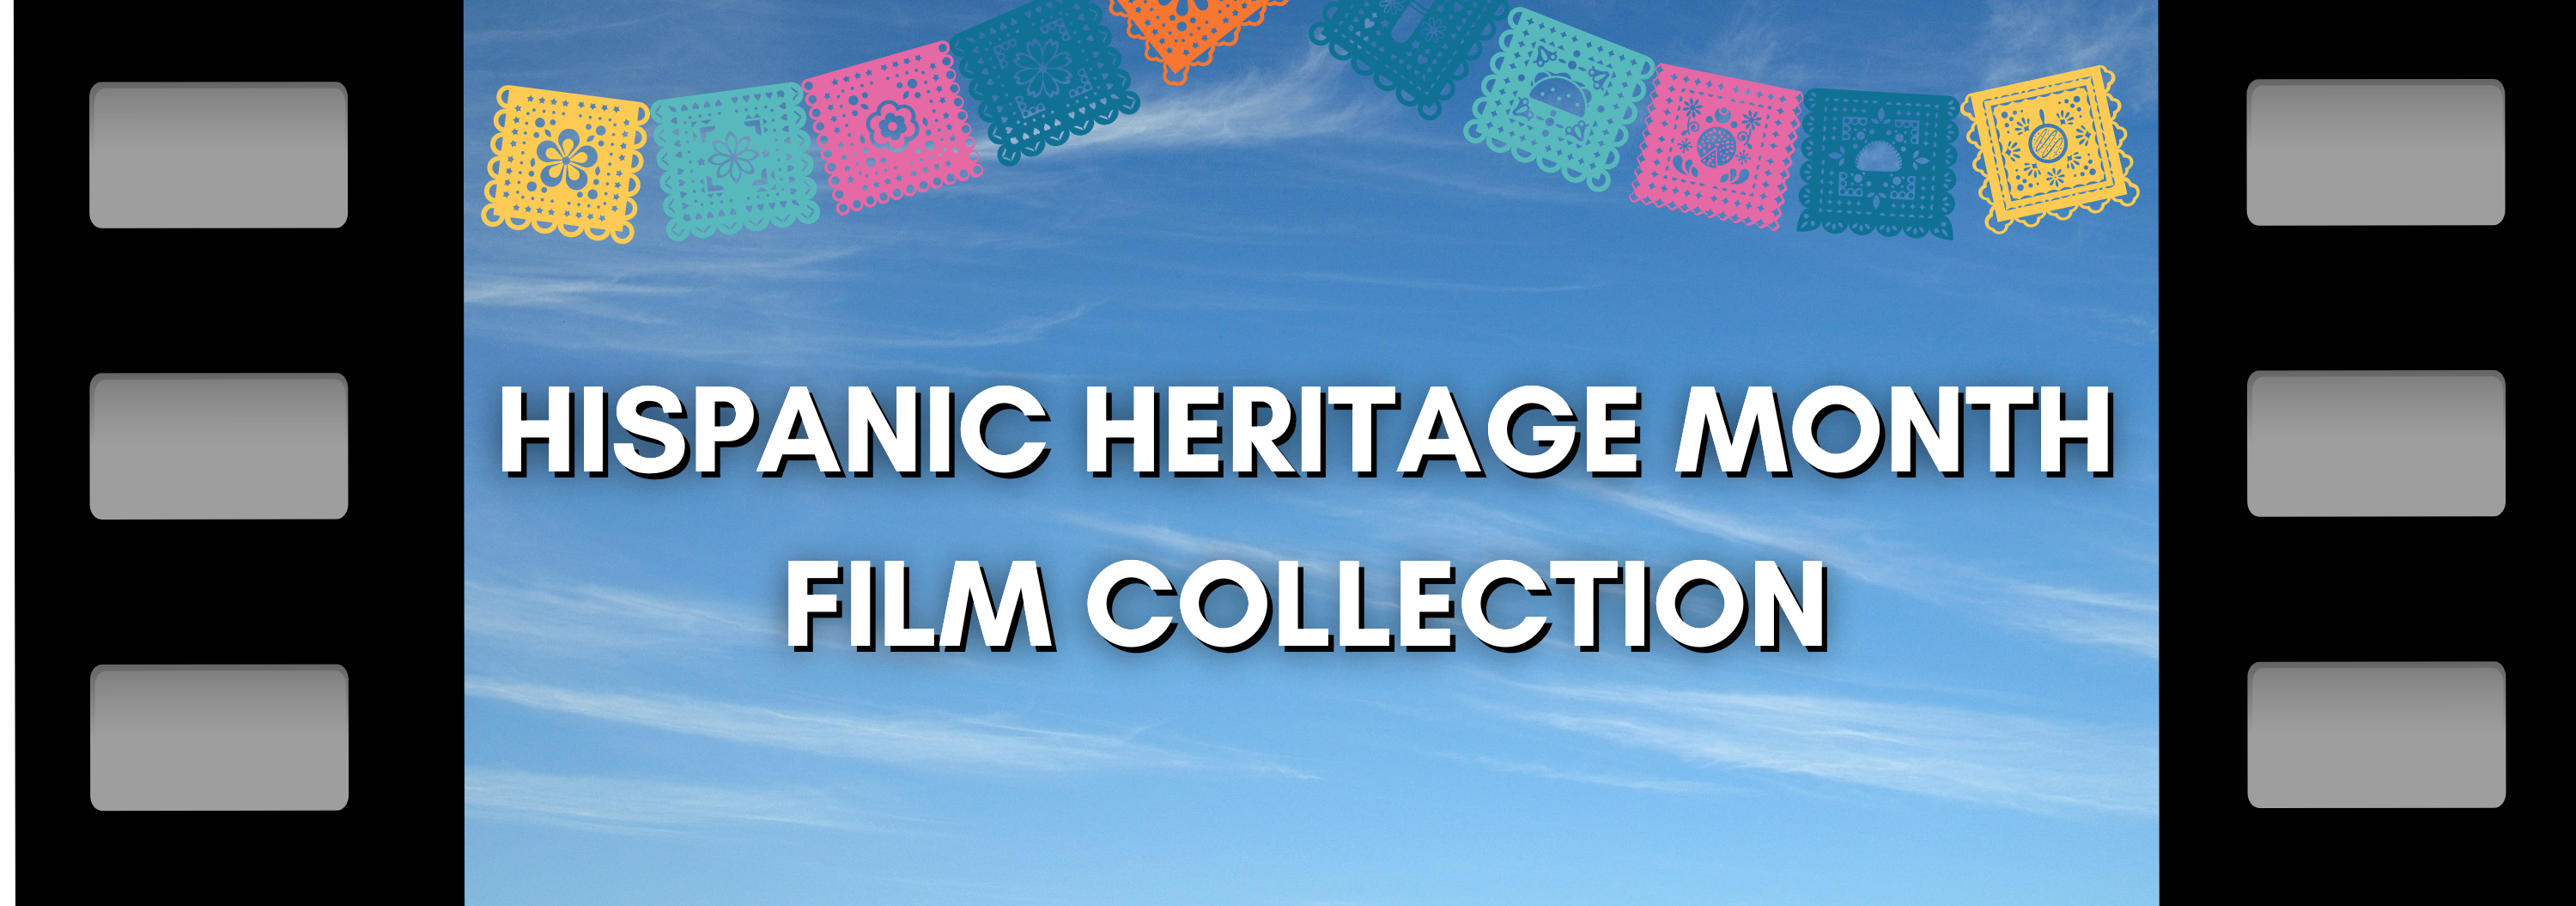 Hispanic Heritage Month Film Collection 